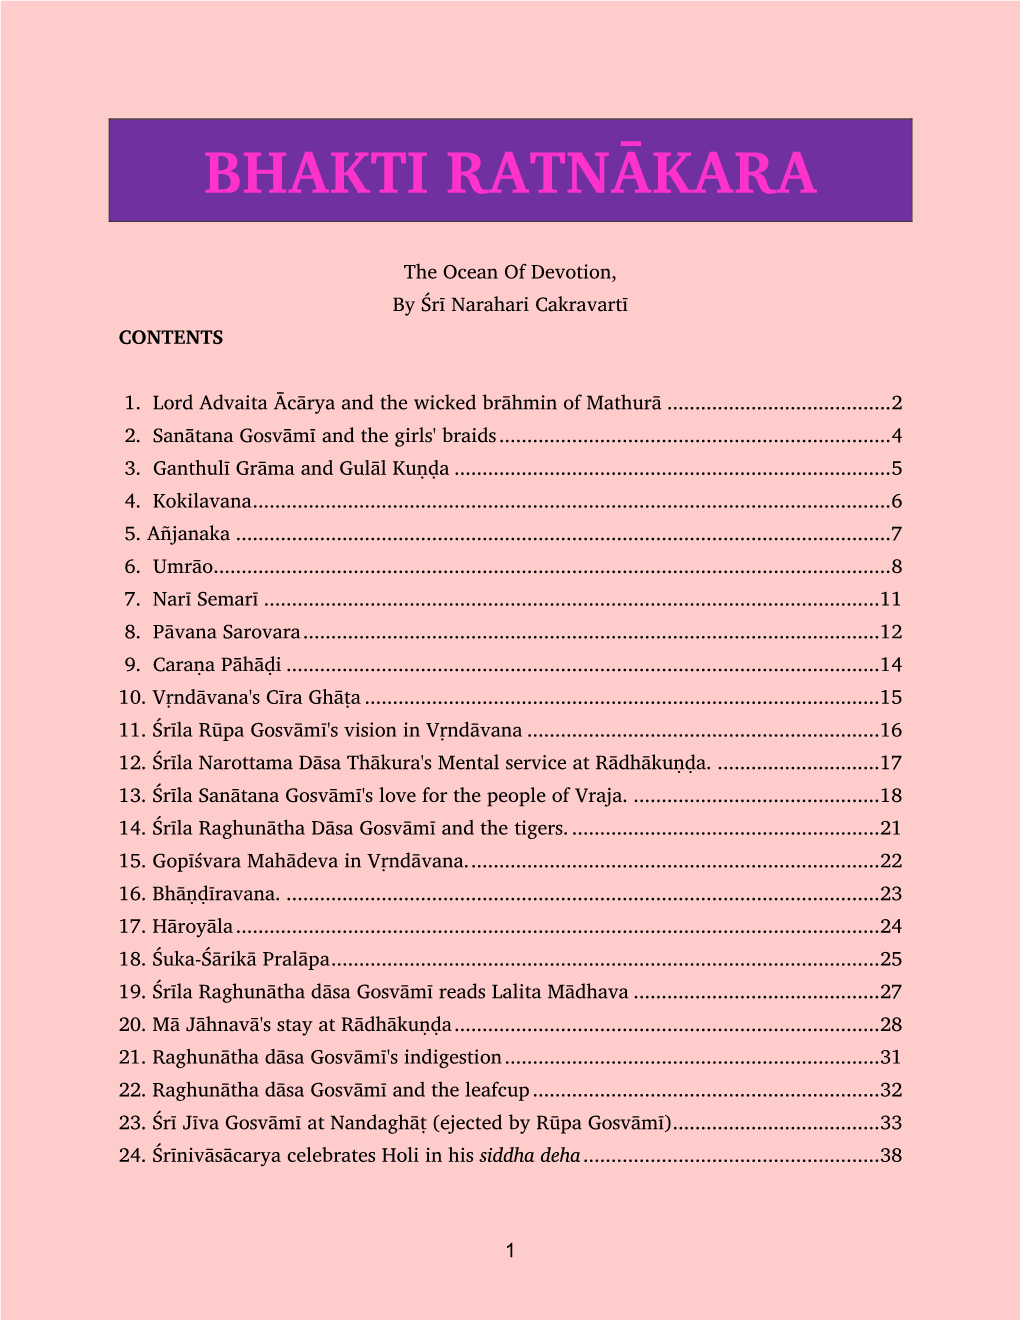 Excerpts from Bhakti Ratnakara